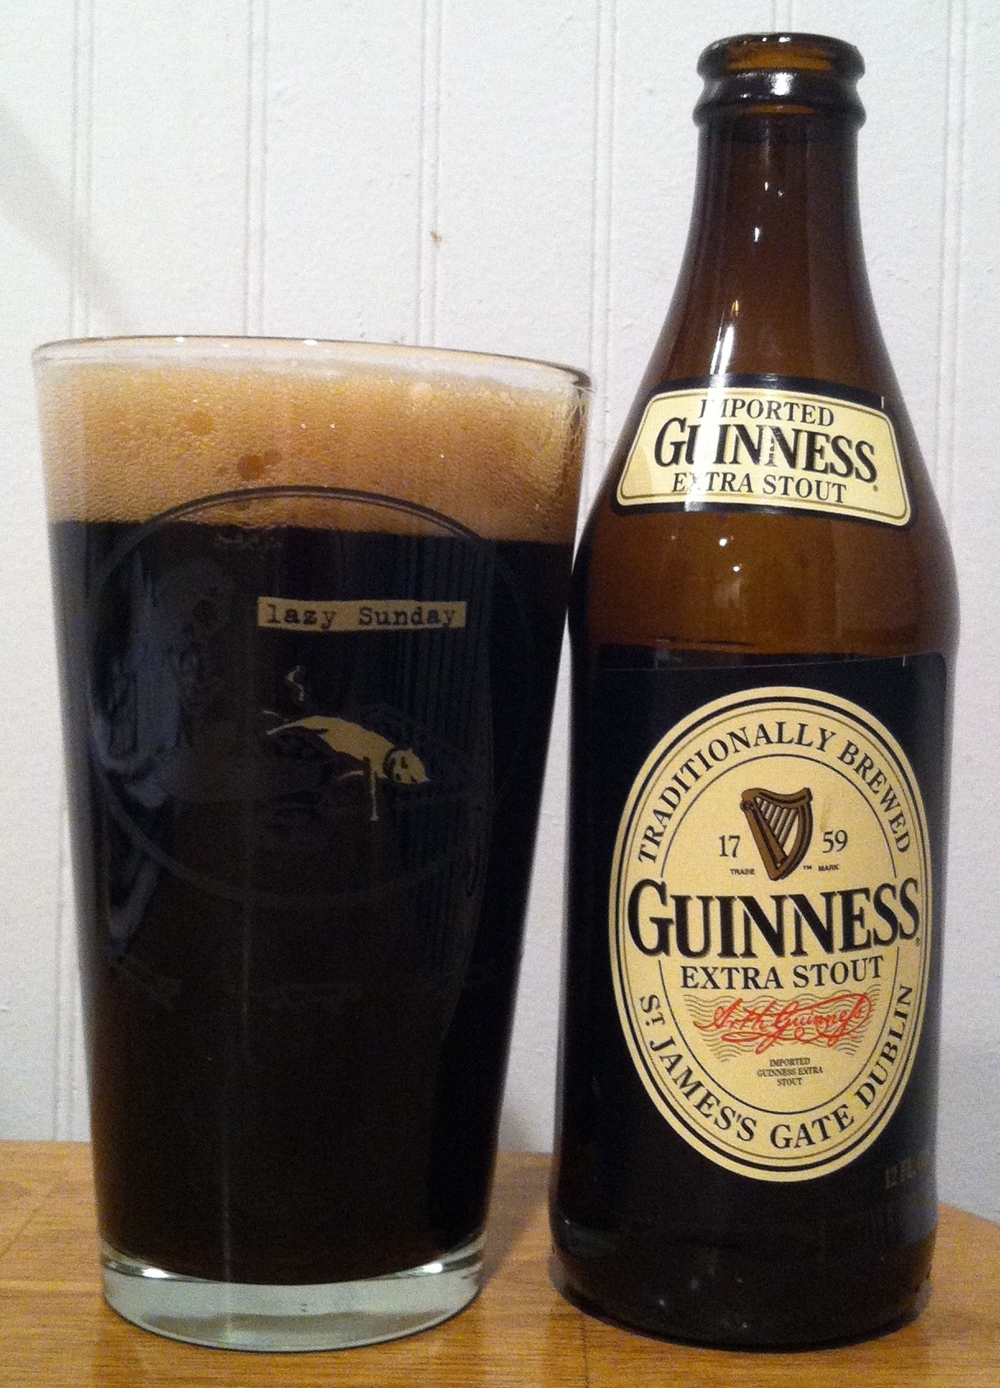 История пива "Guinness"